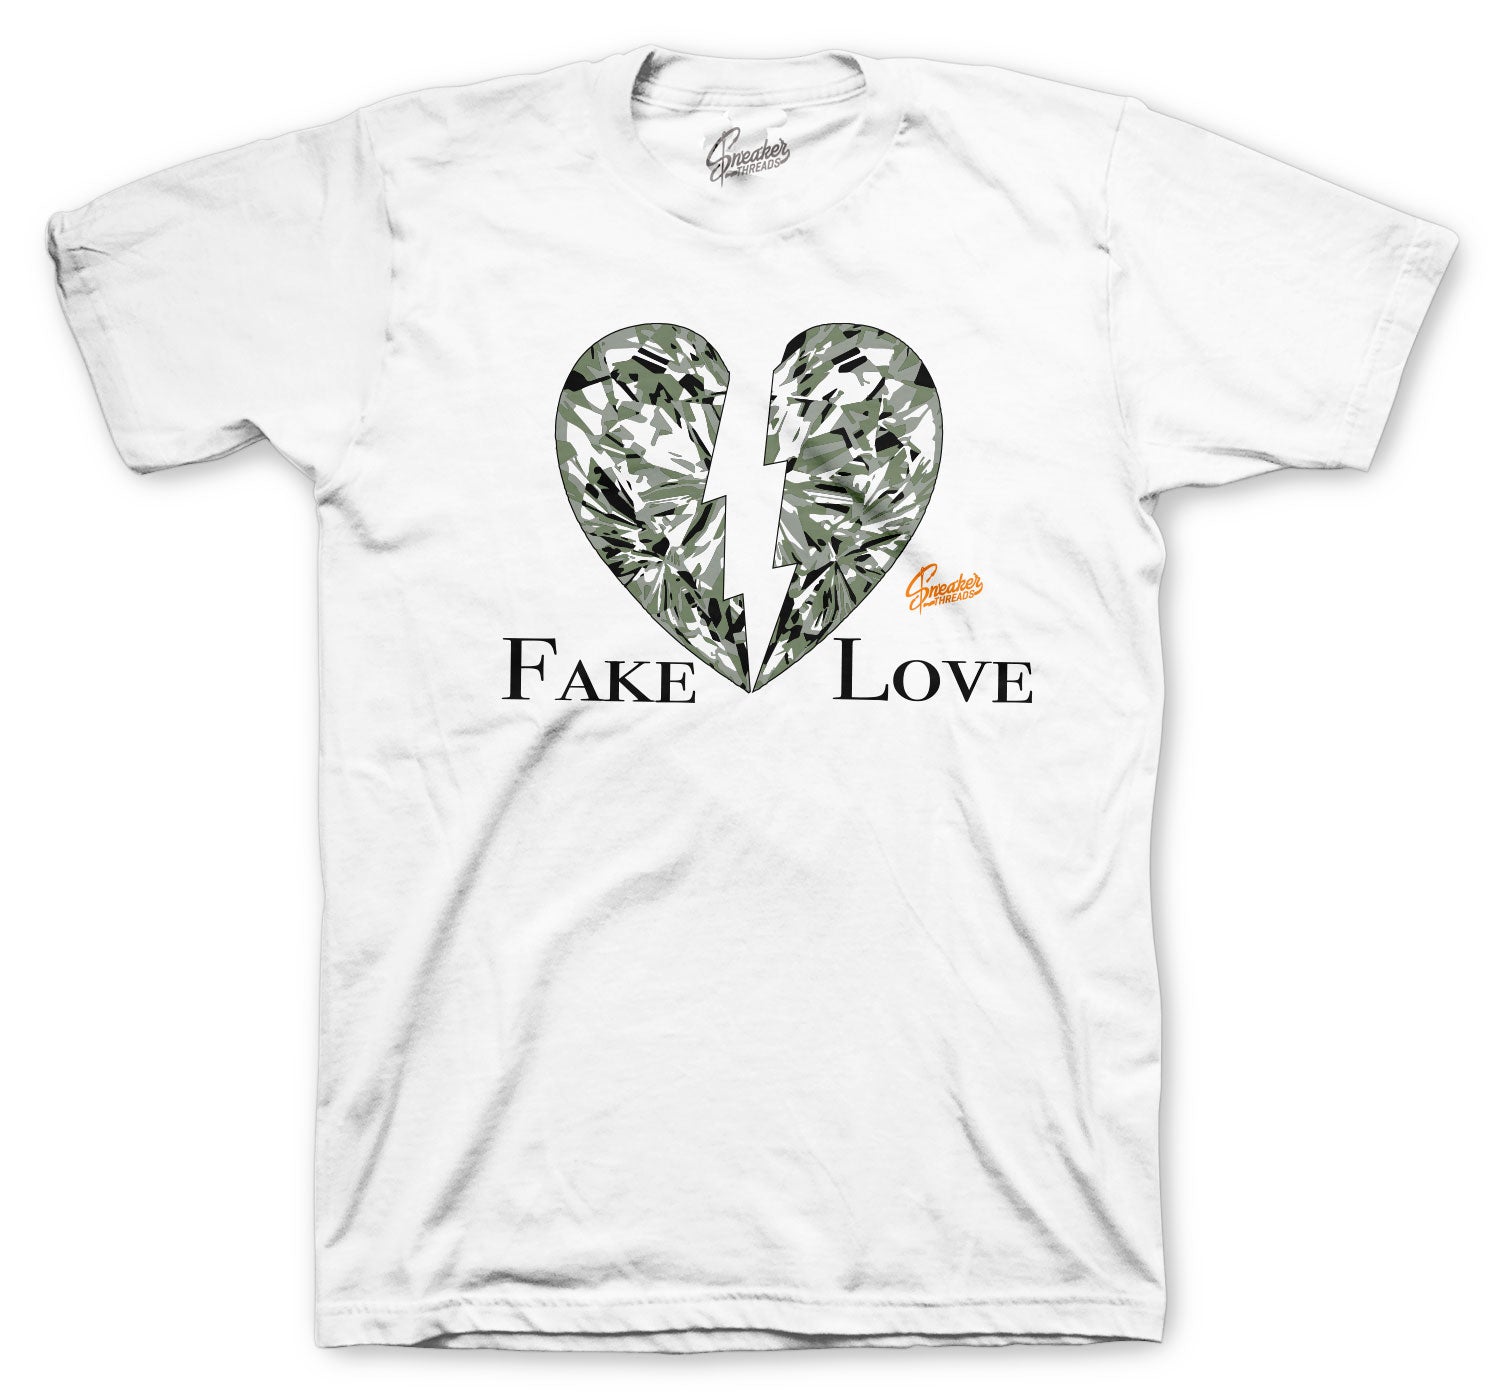 Retro 1 Seafoam Shirt - Love - White